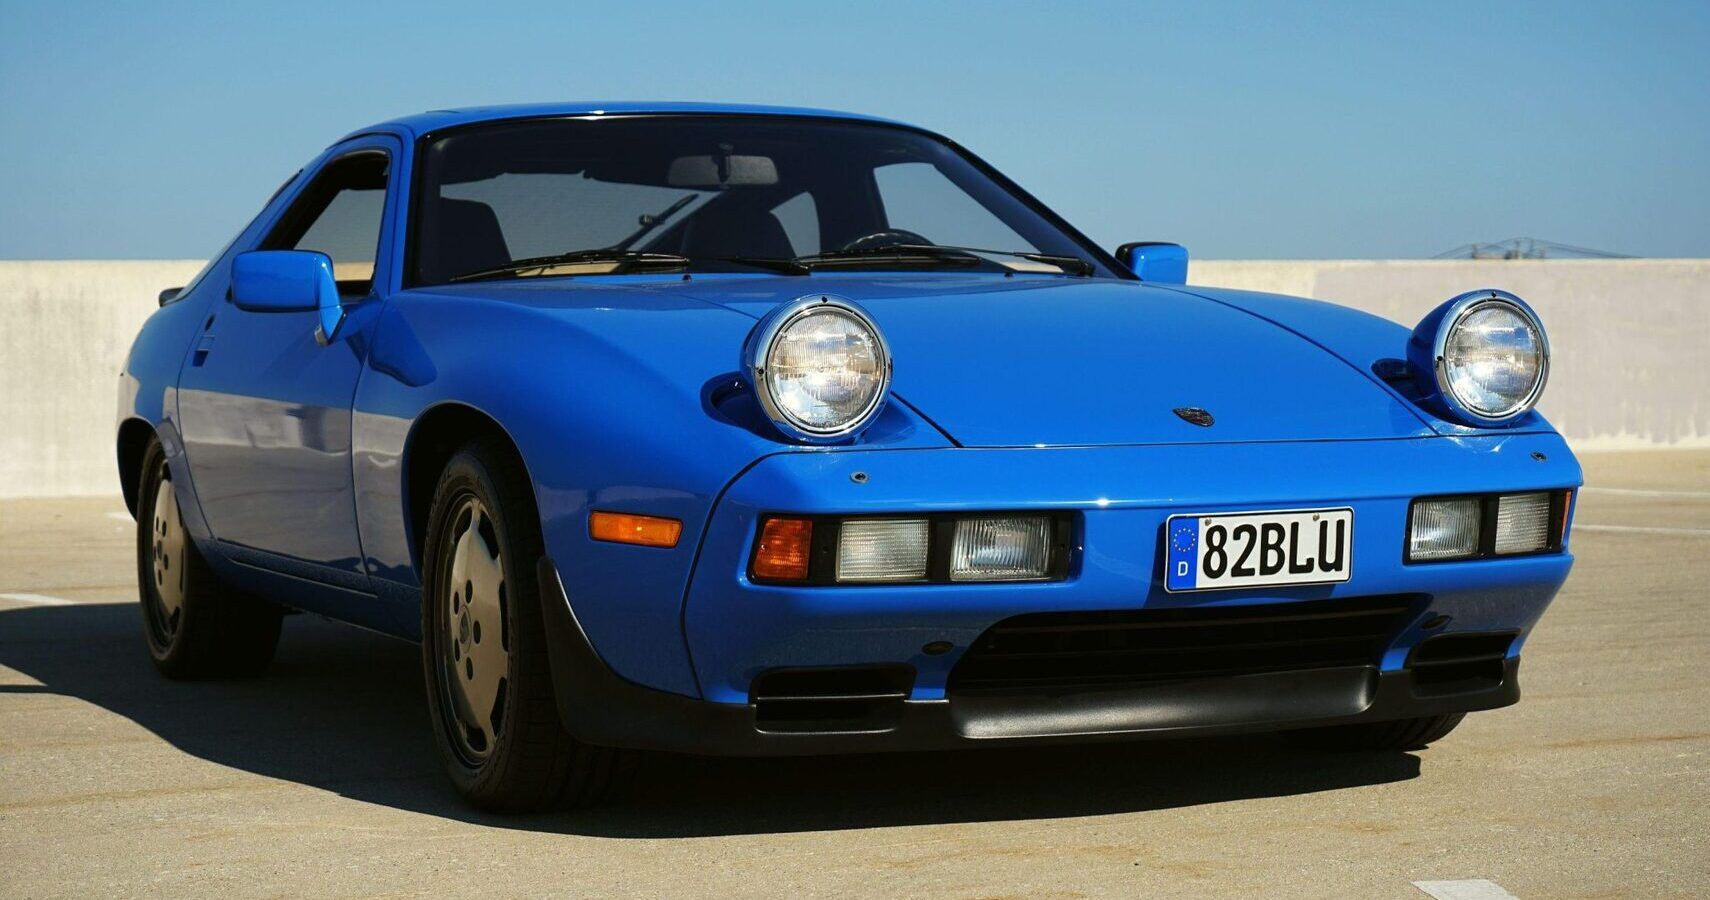 Blue Porsche 928 sports car parked